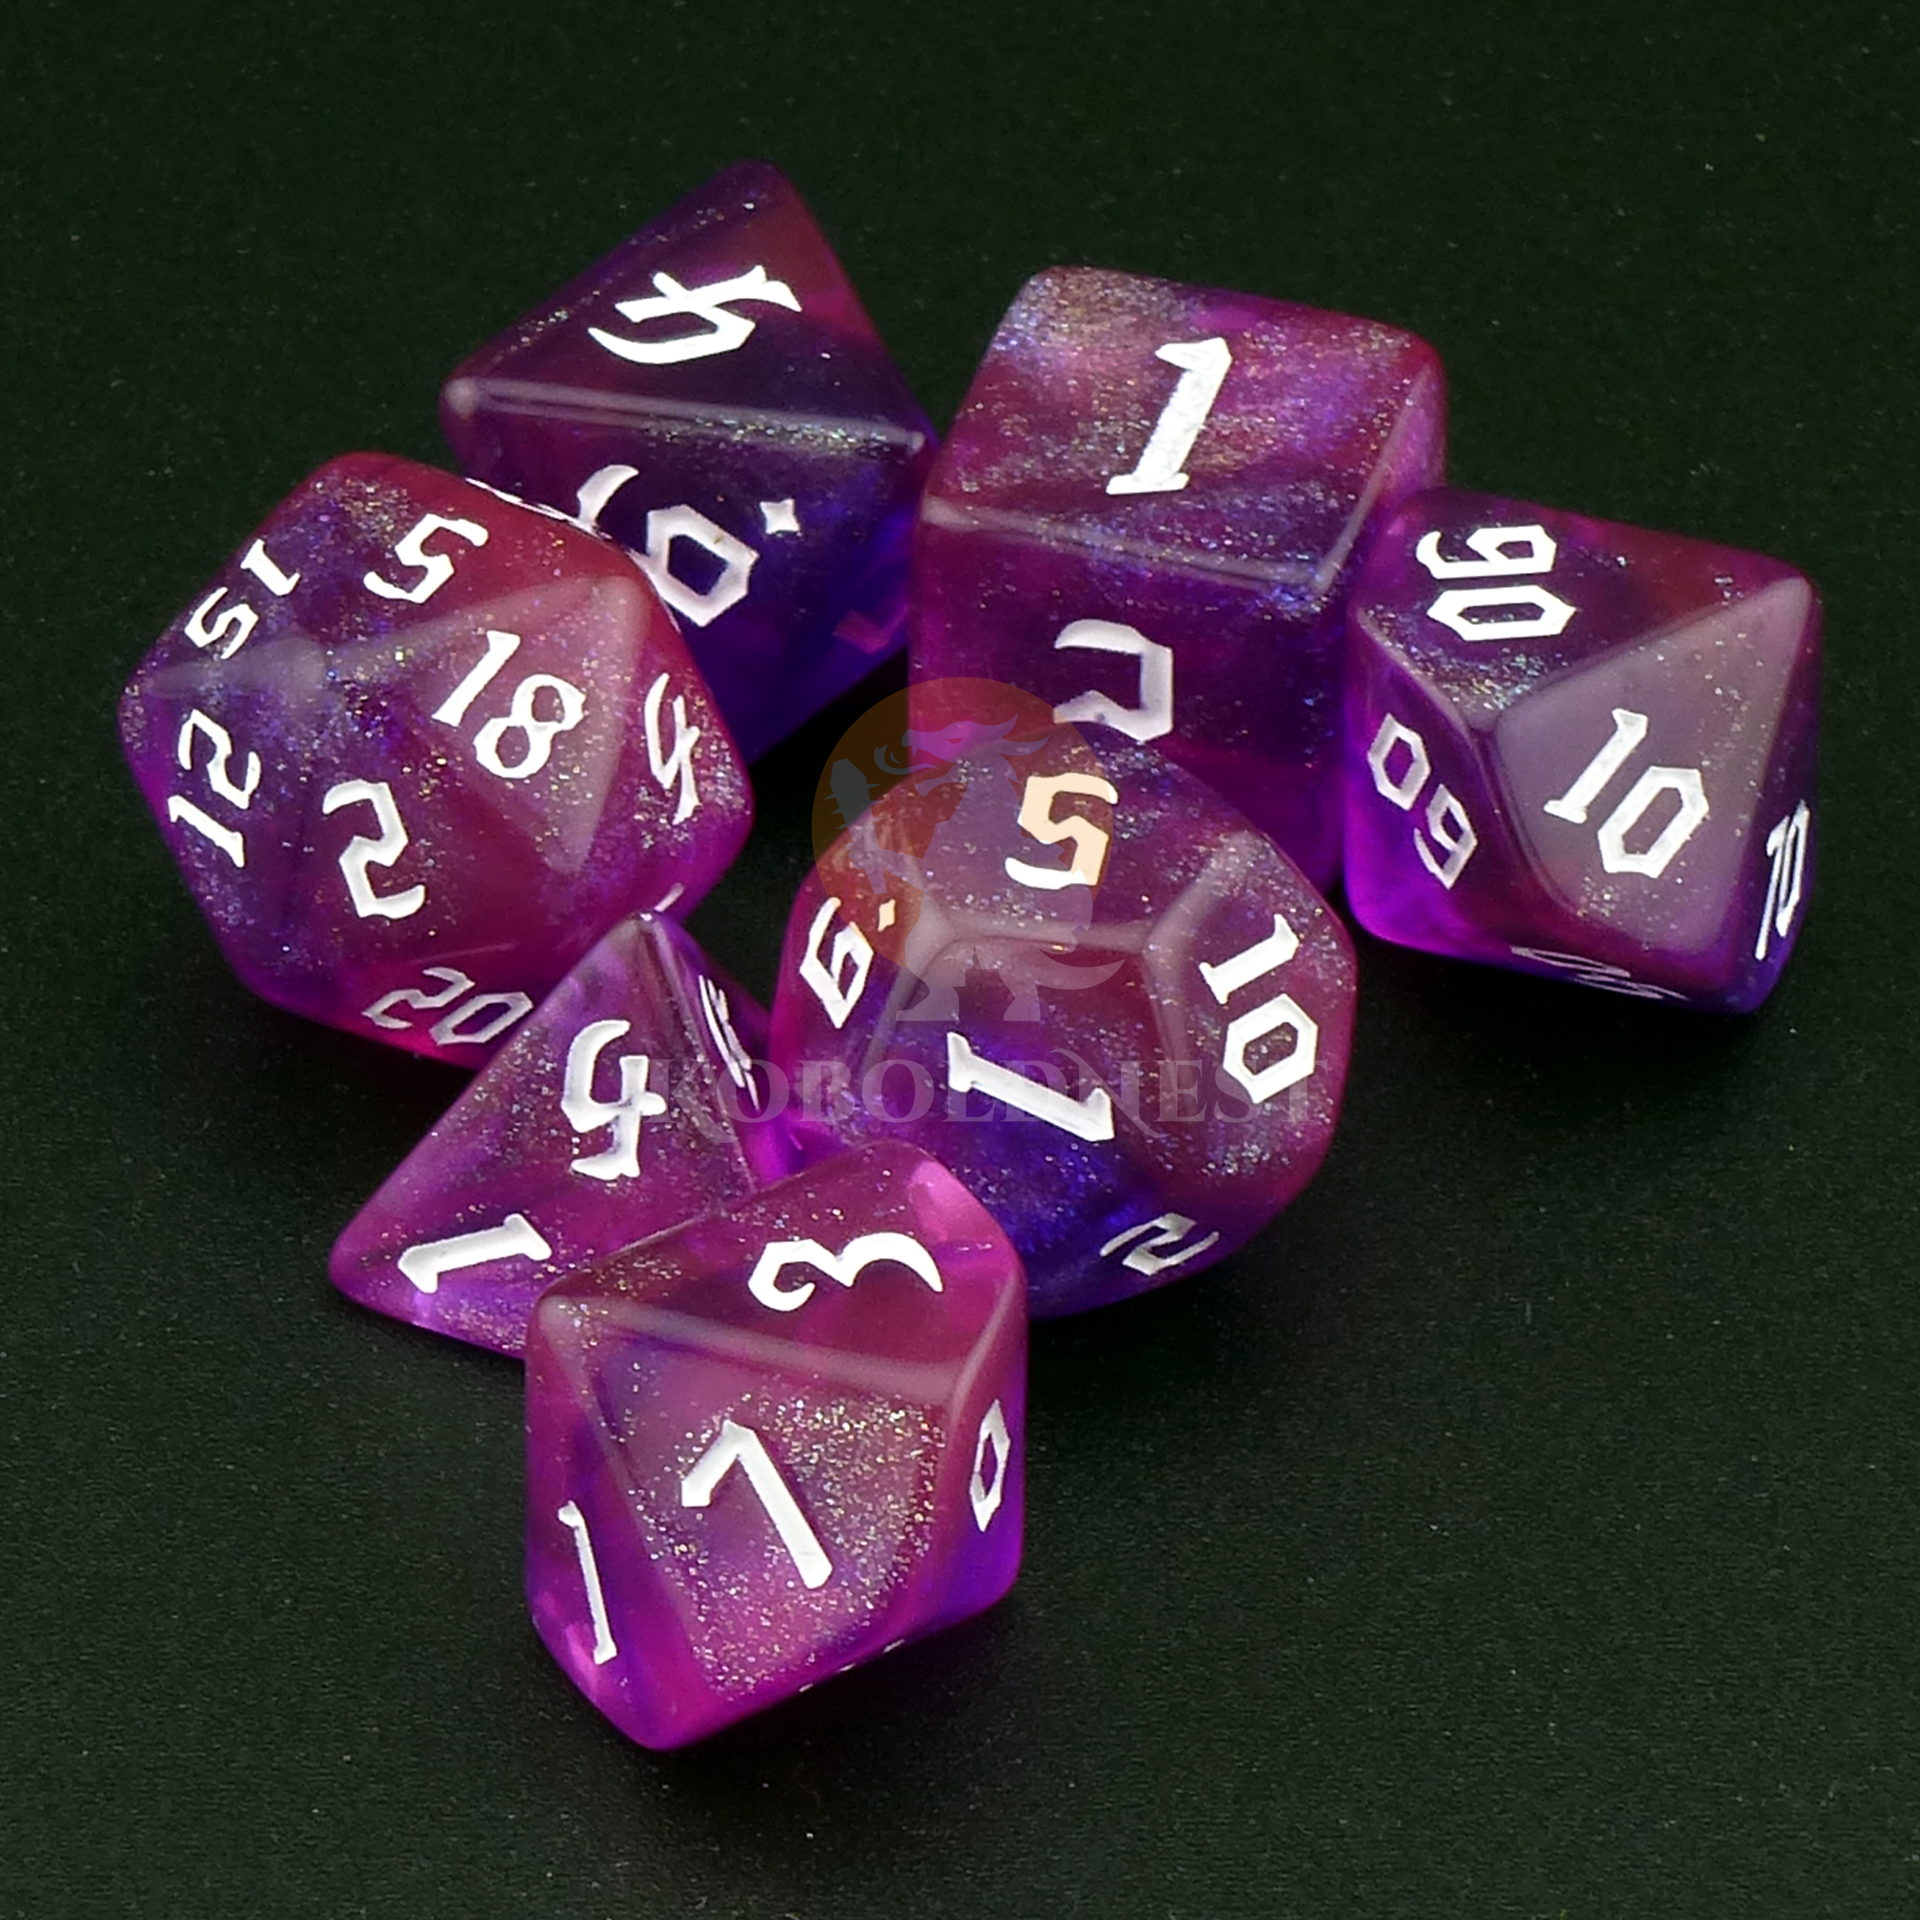 Dice_Polyhedral_Set_Standard_Purple-Clear-Glitter_Heap.png